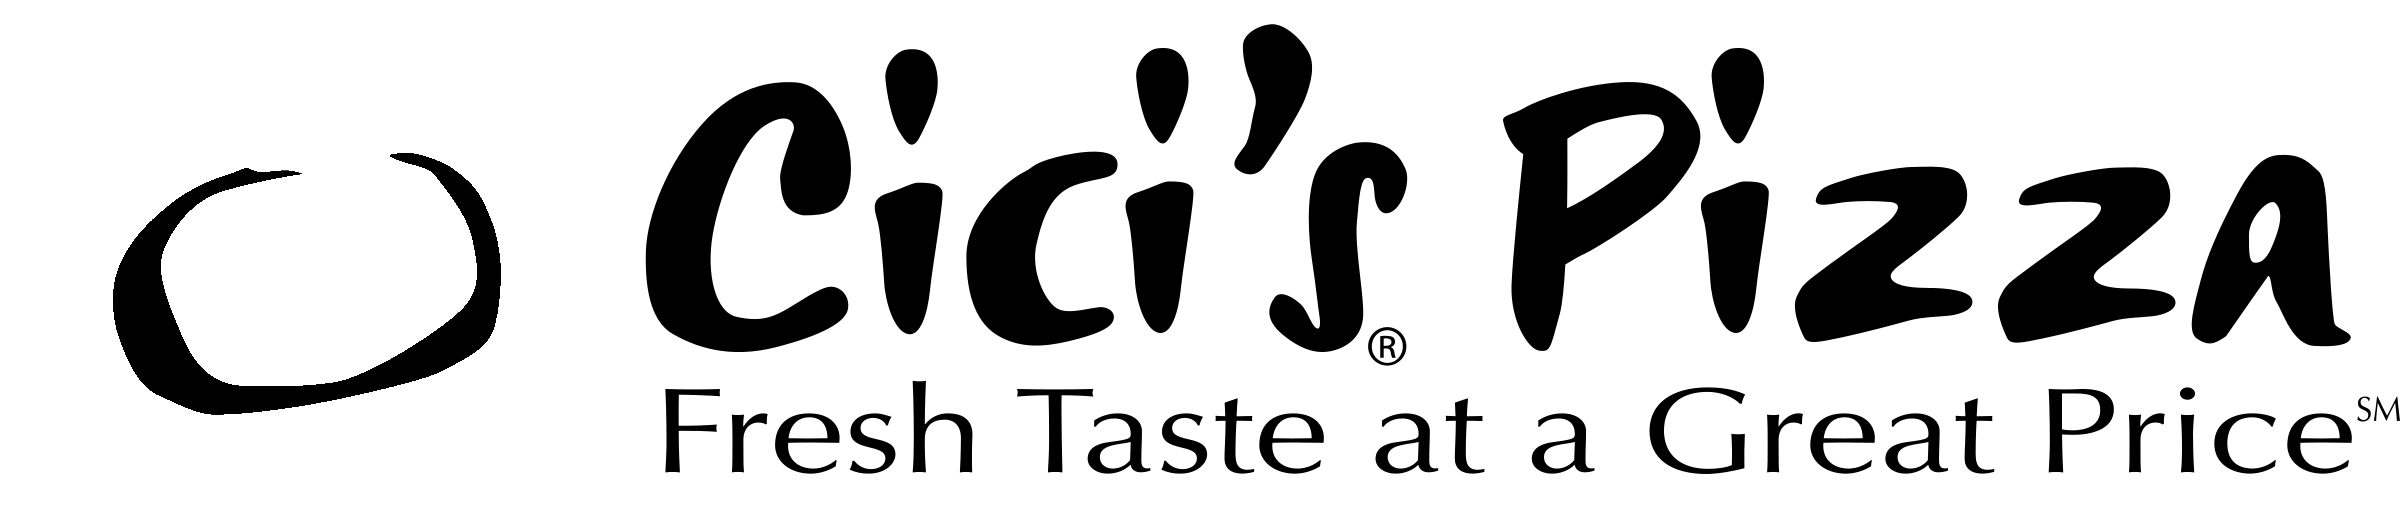 Cici's Logo - Cici's Pizza Logo PNG Transparent & SVG Vector